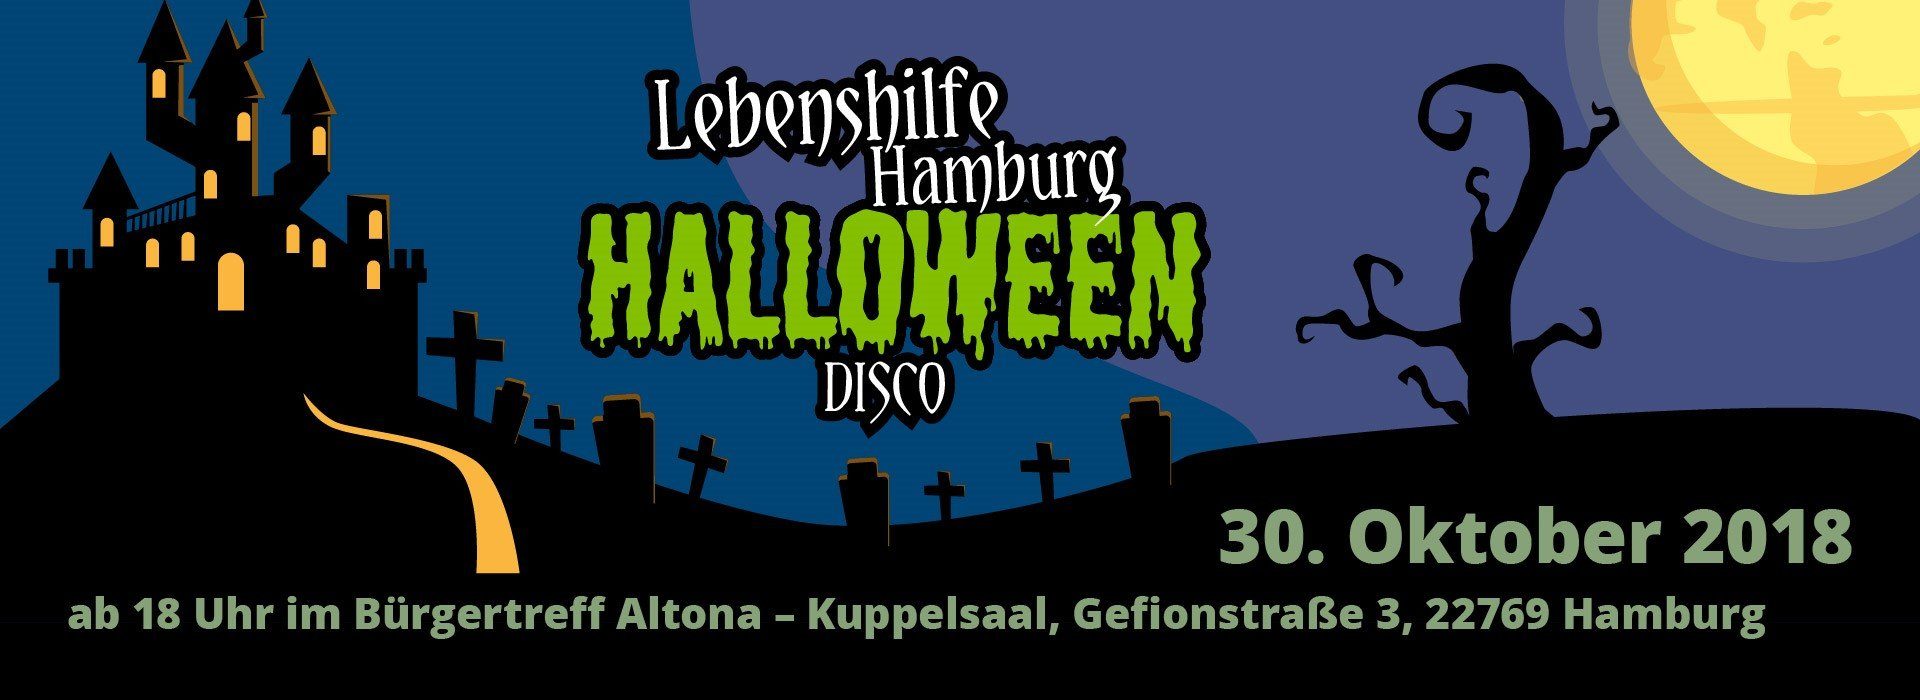 Flyer Halloween-Disco: Lebenshilfe Hamburg Halloween-Disco, 30. Oktober 2018, ab 18 Uhr im Bürgertreff Altona - Kuppelsaal, Gefionstr. 3, 22769 Hamburg